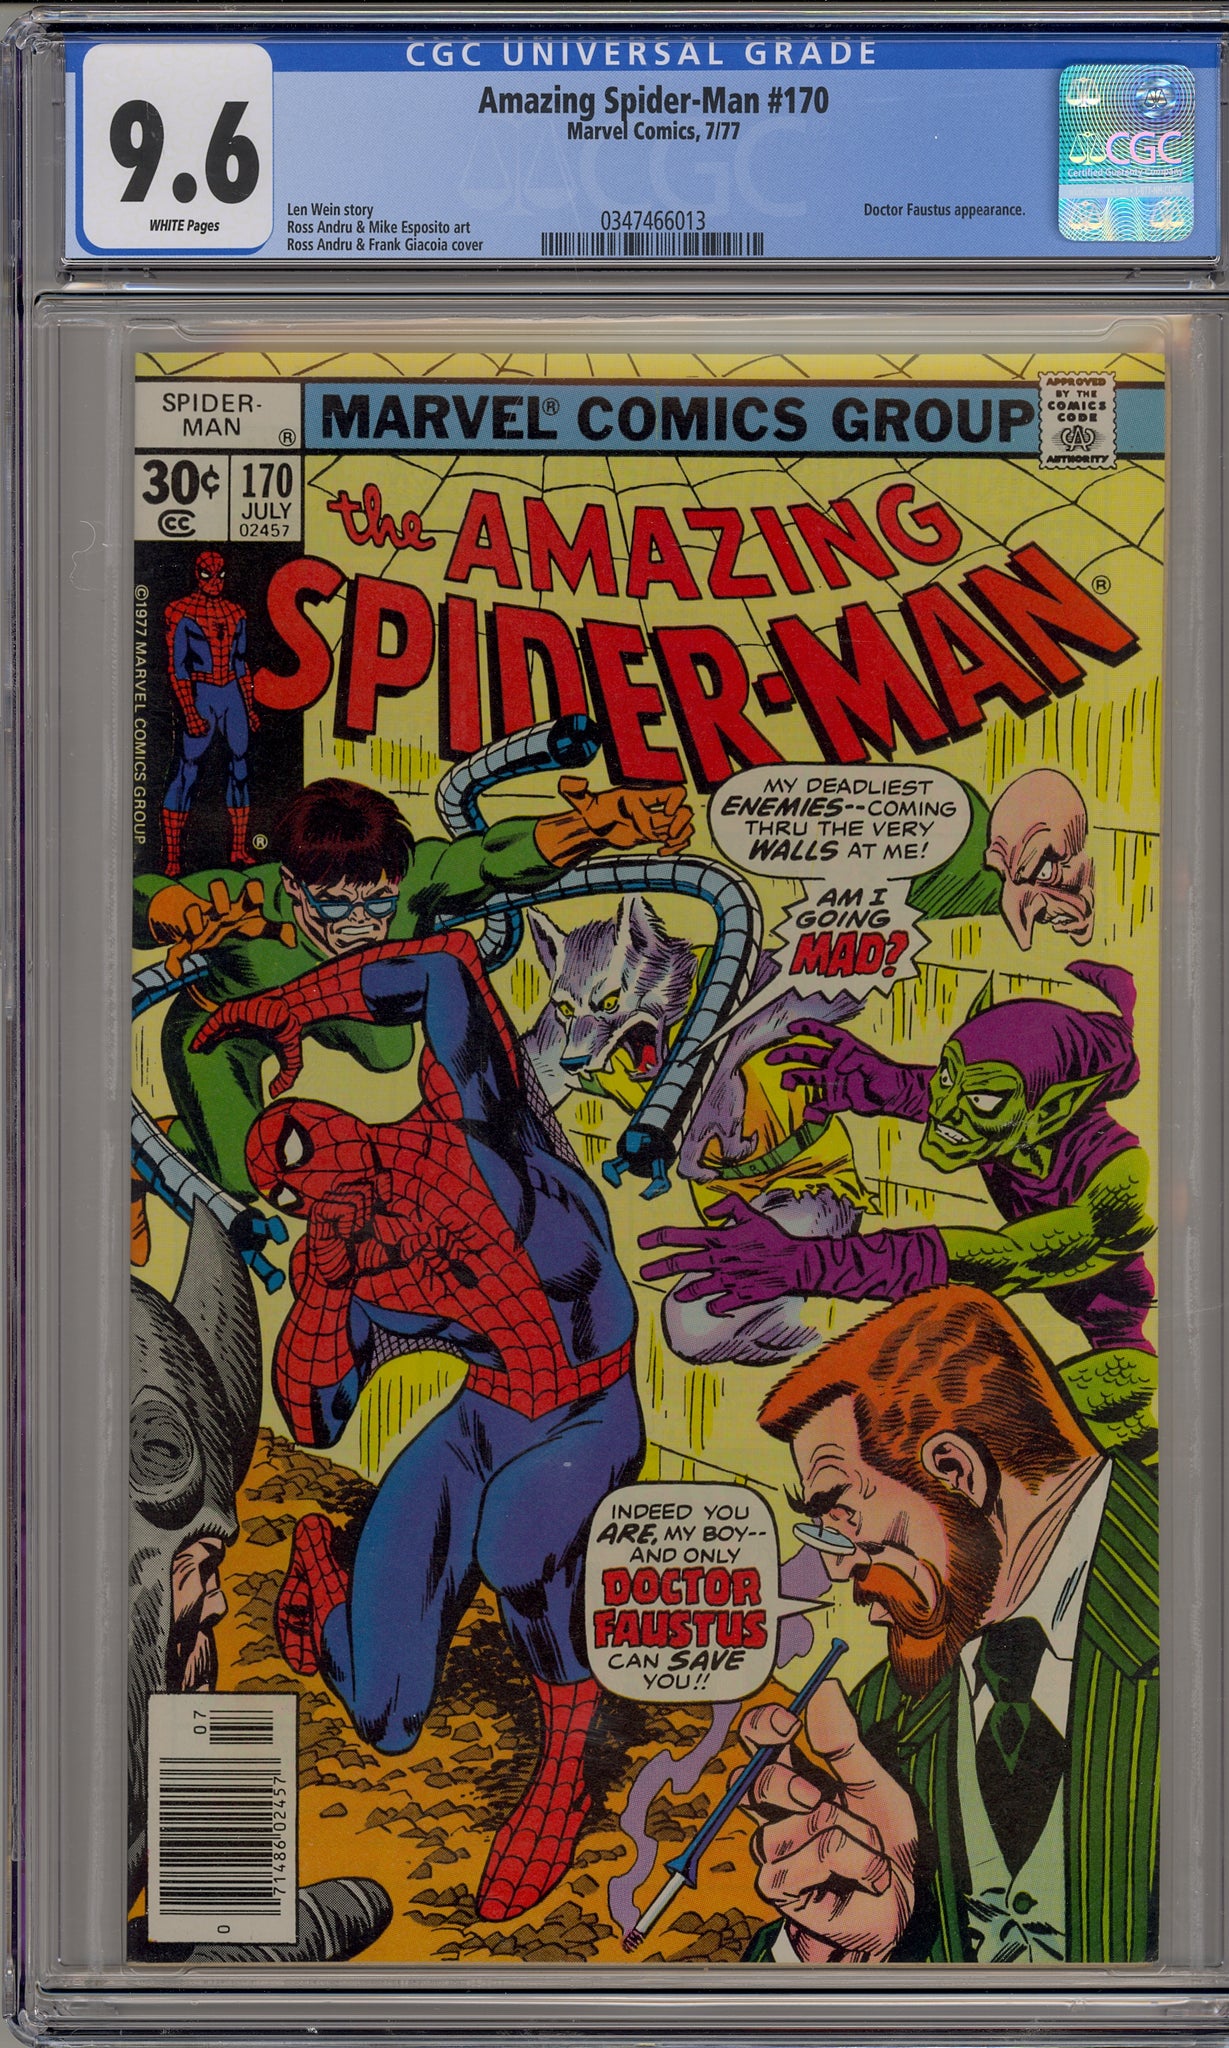 Amazing Spider-Man #170 (1977) Doctor Faustus